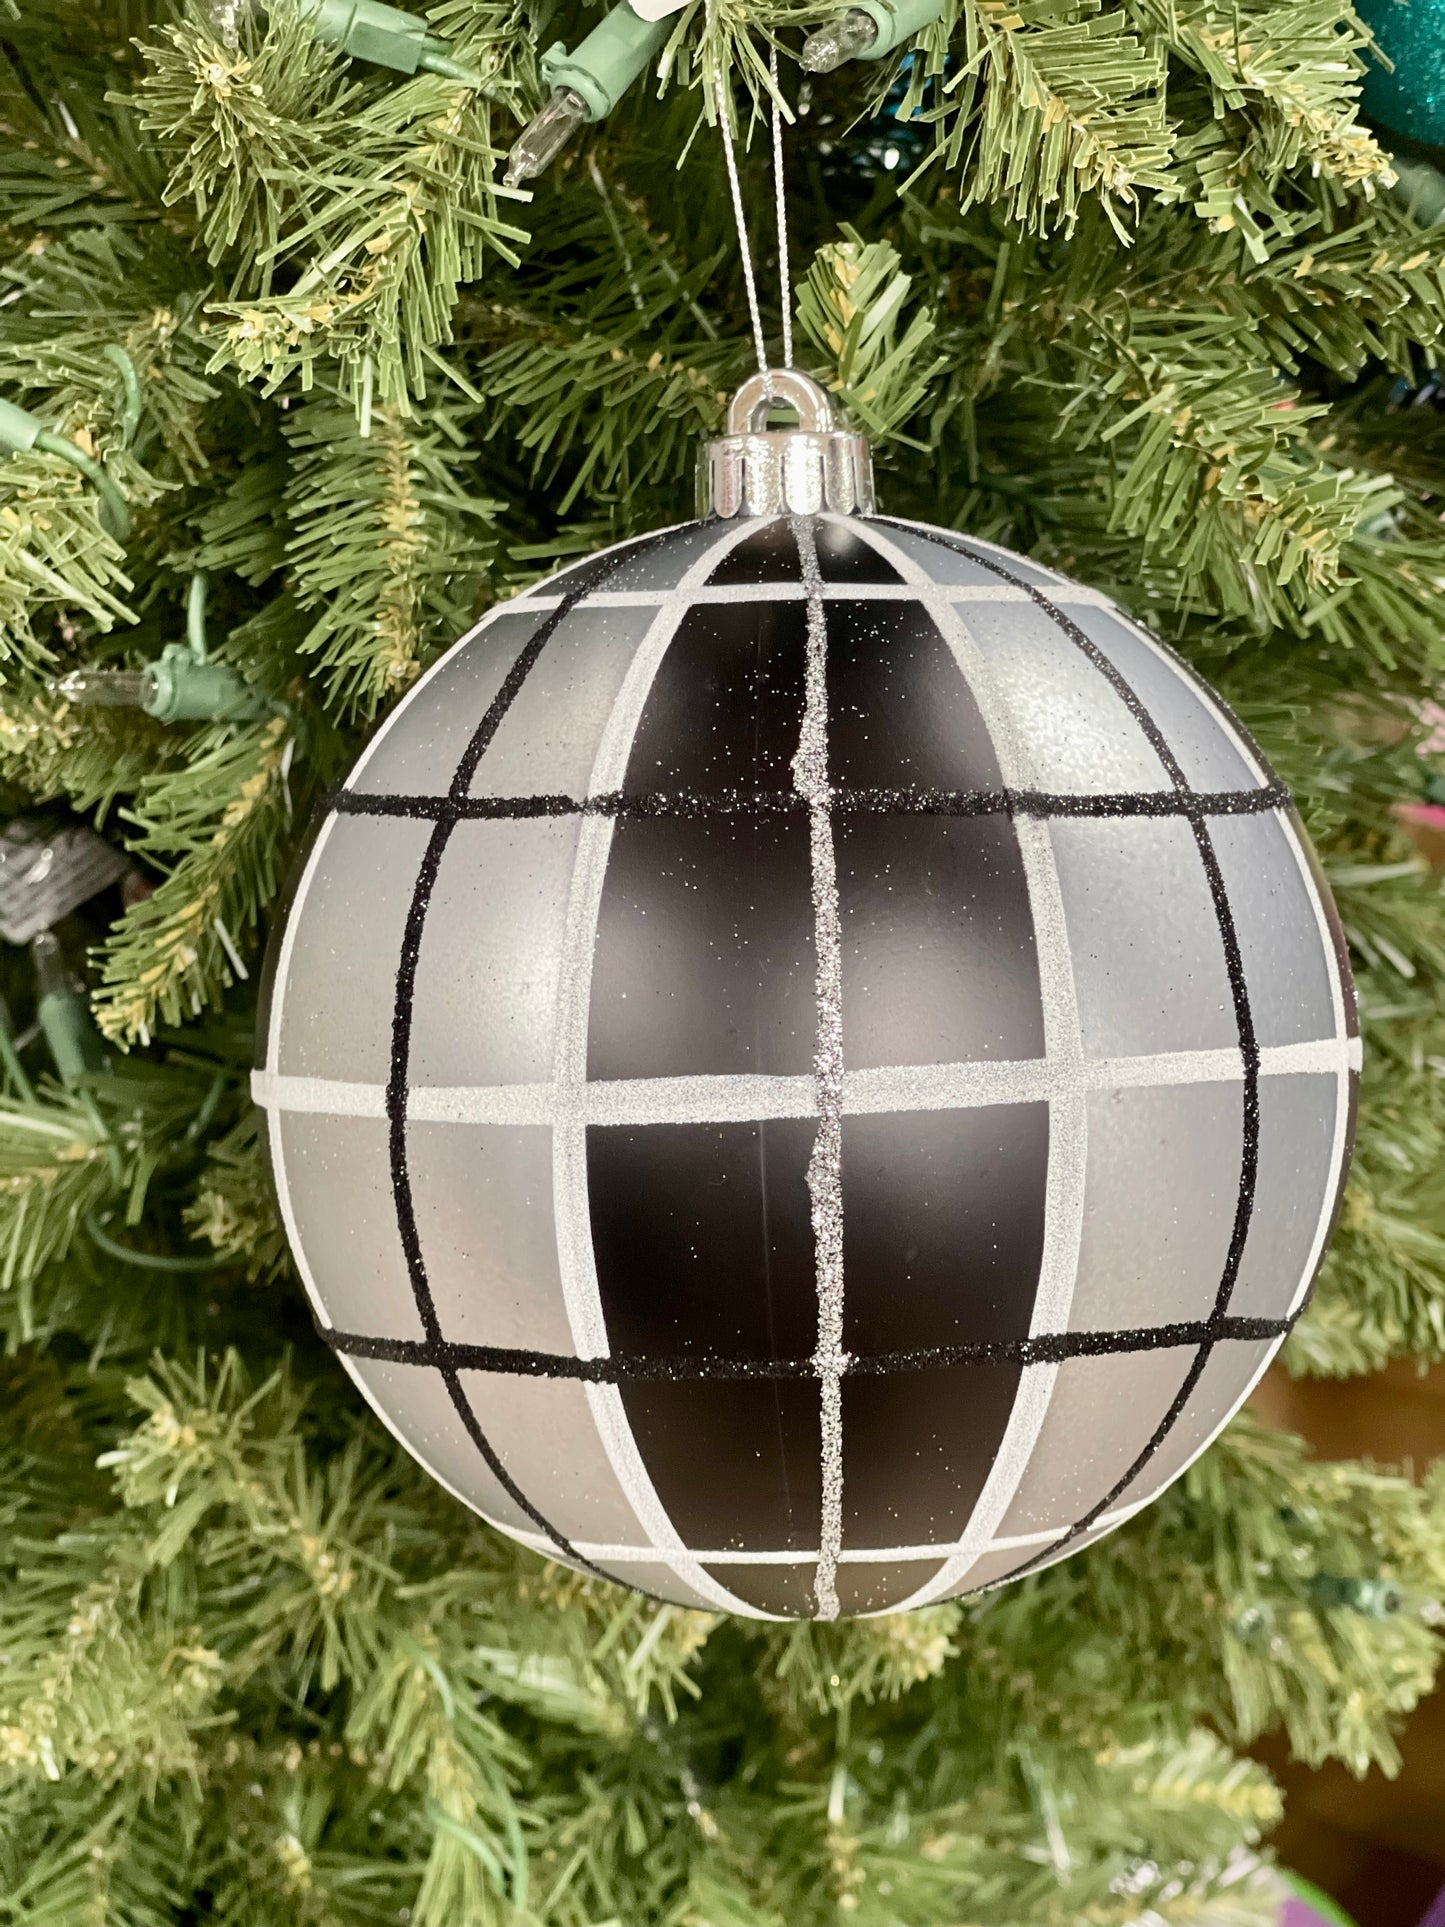 6 Inch Black White And Silver Ornament Ball